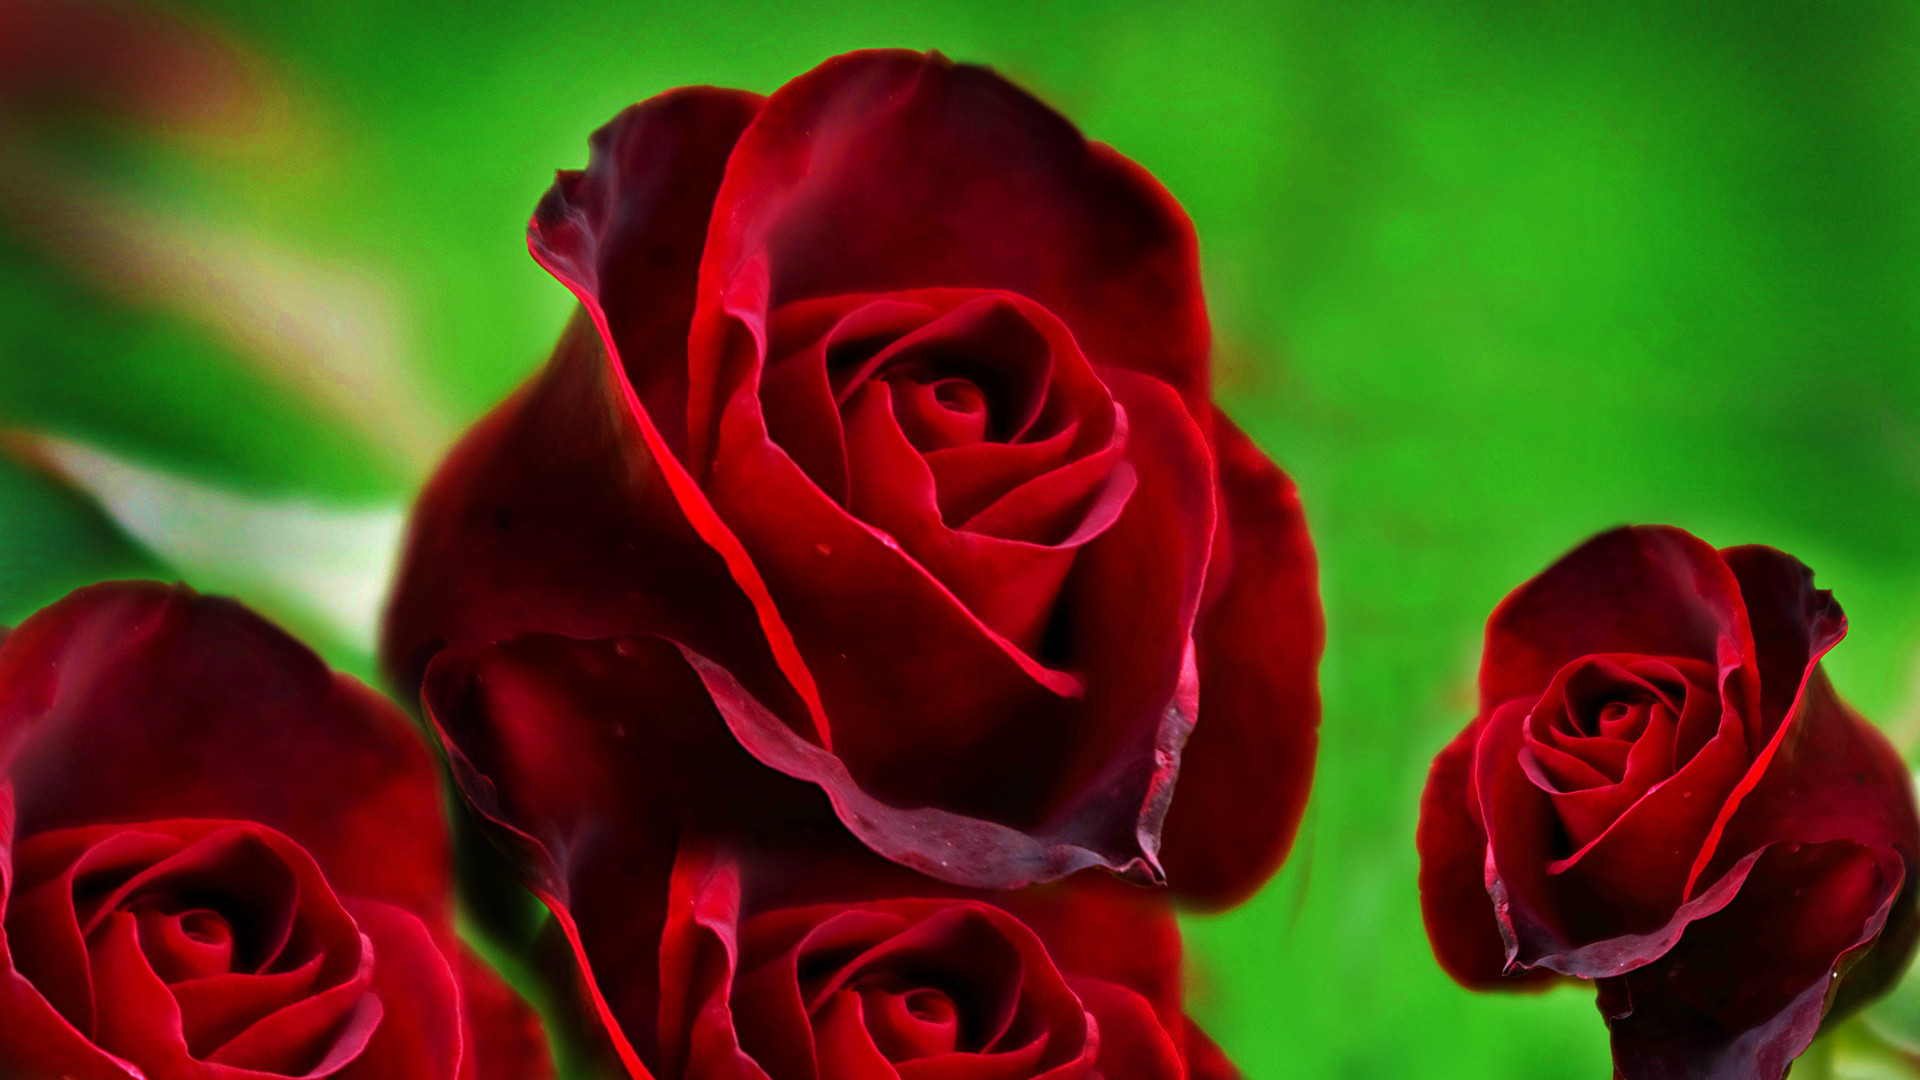 Wallpaper of red roses hd free wallpaper